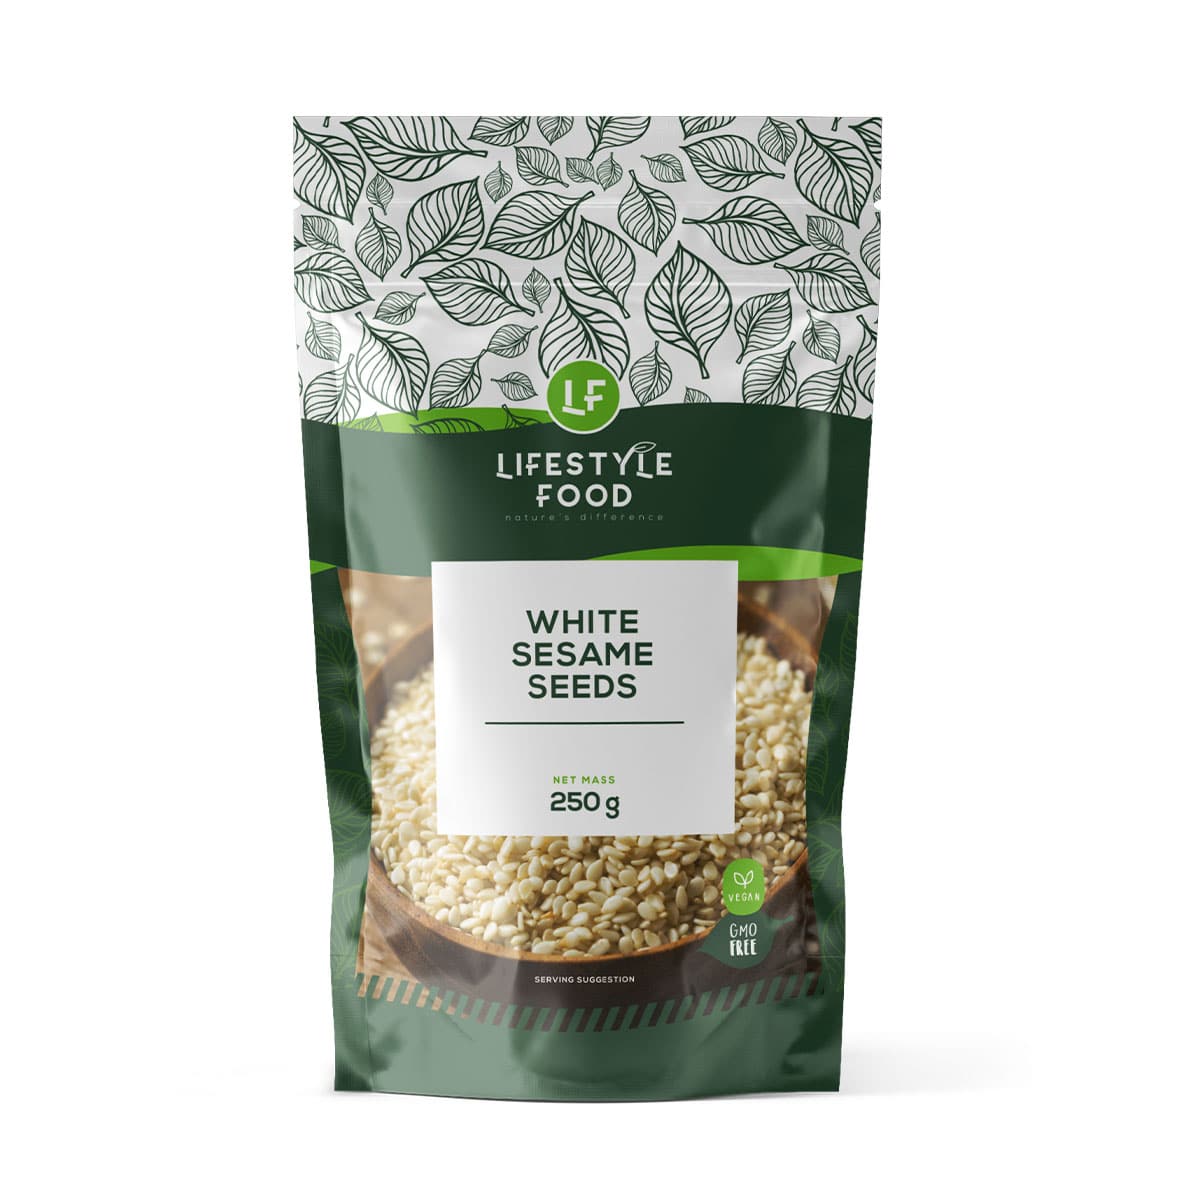 Lifestyle Food White Sesame Seeds - 250g